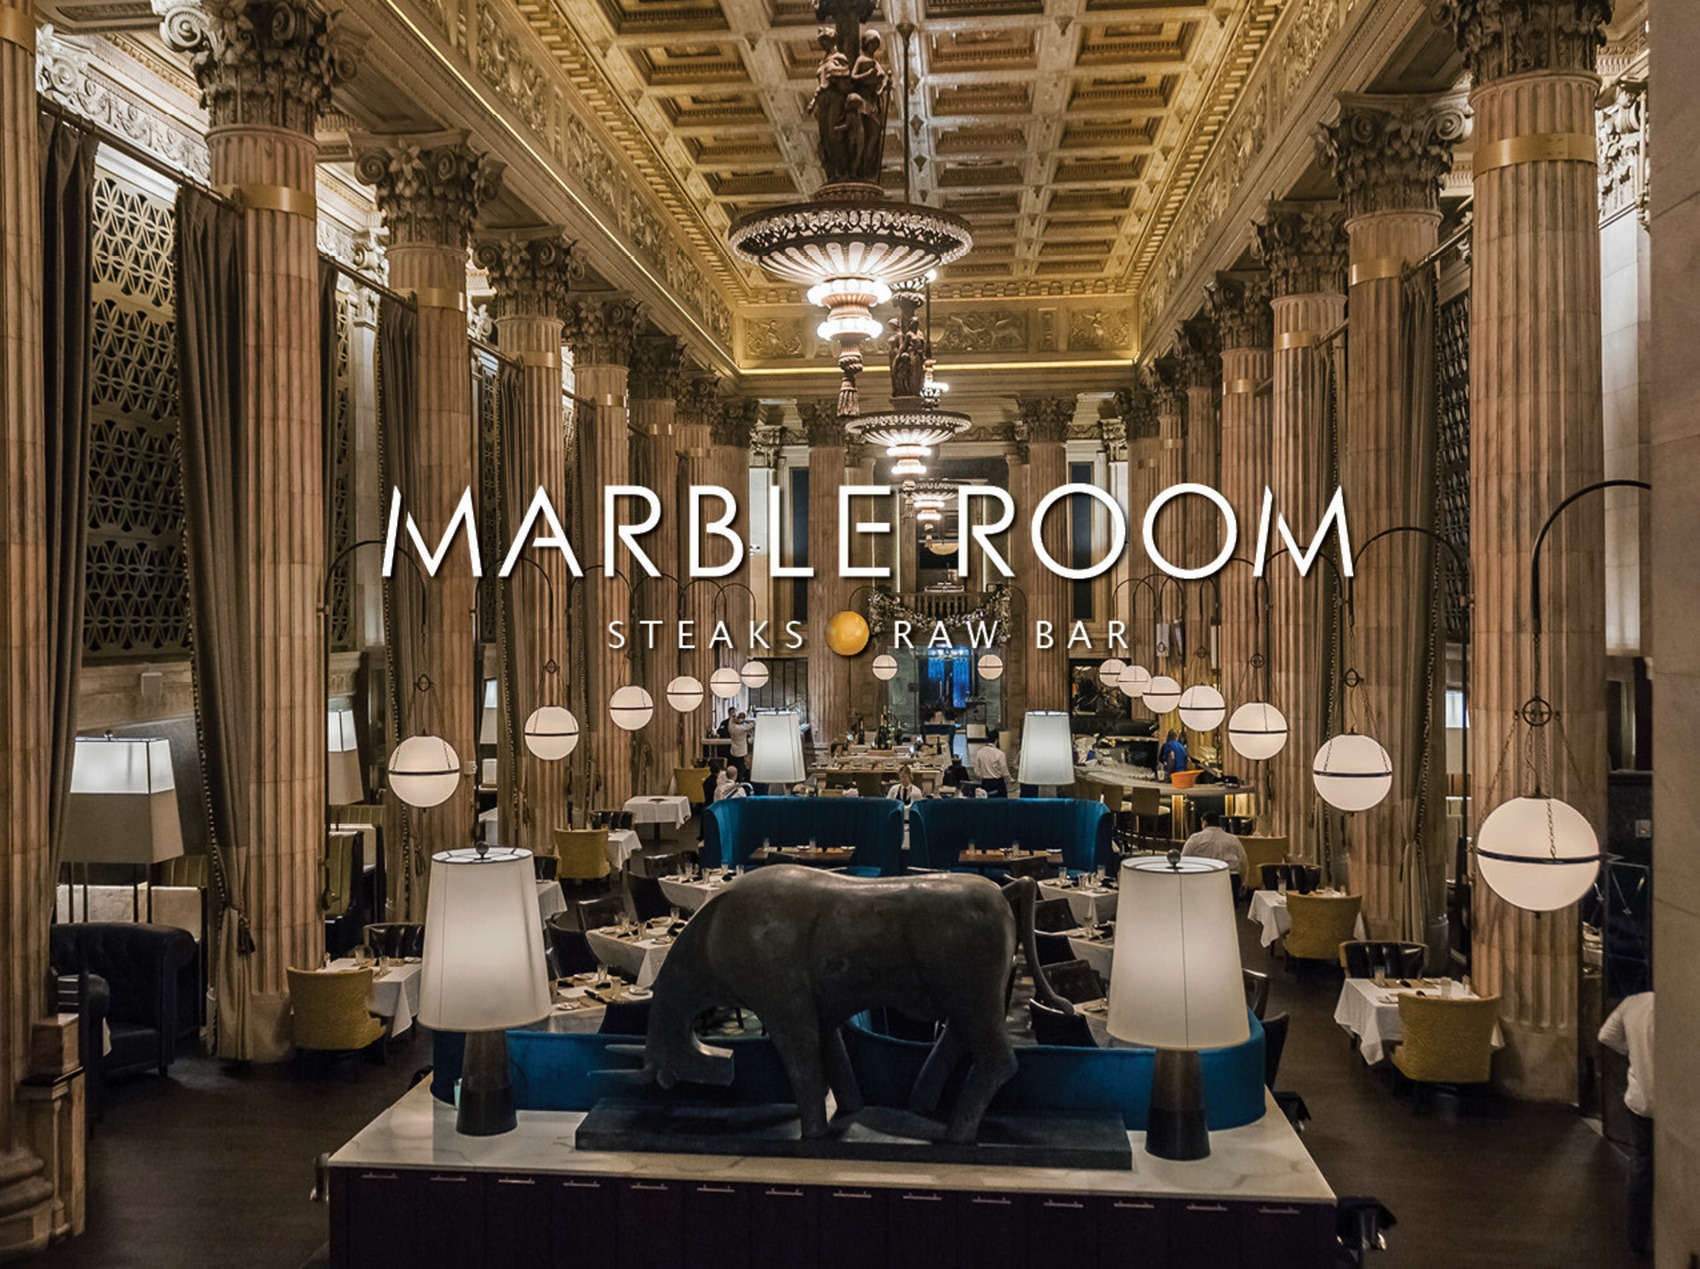 Marble Room Steaks Raw Bar